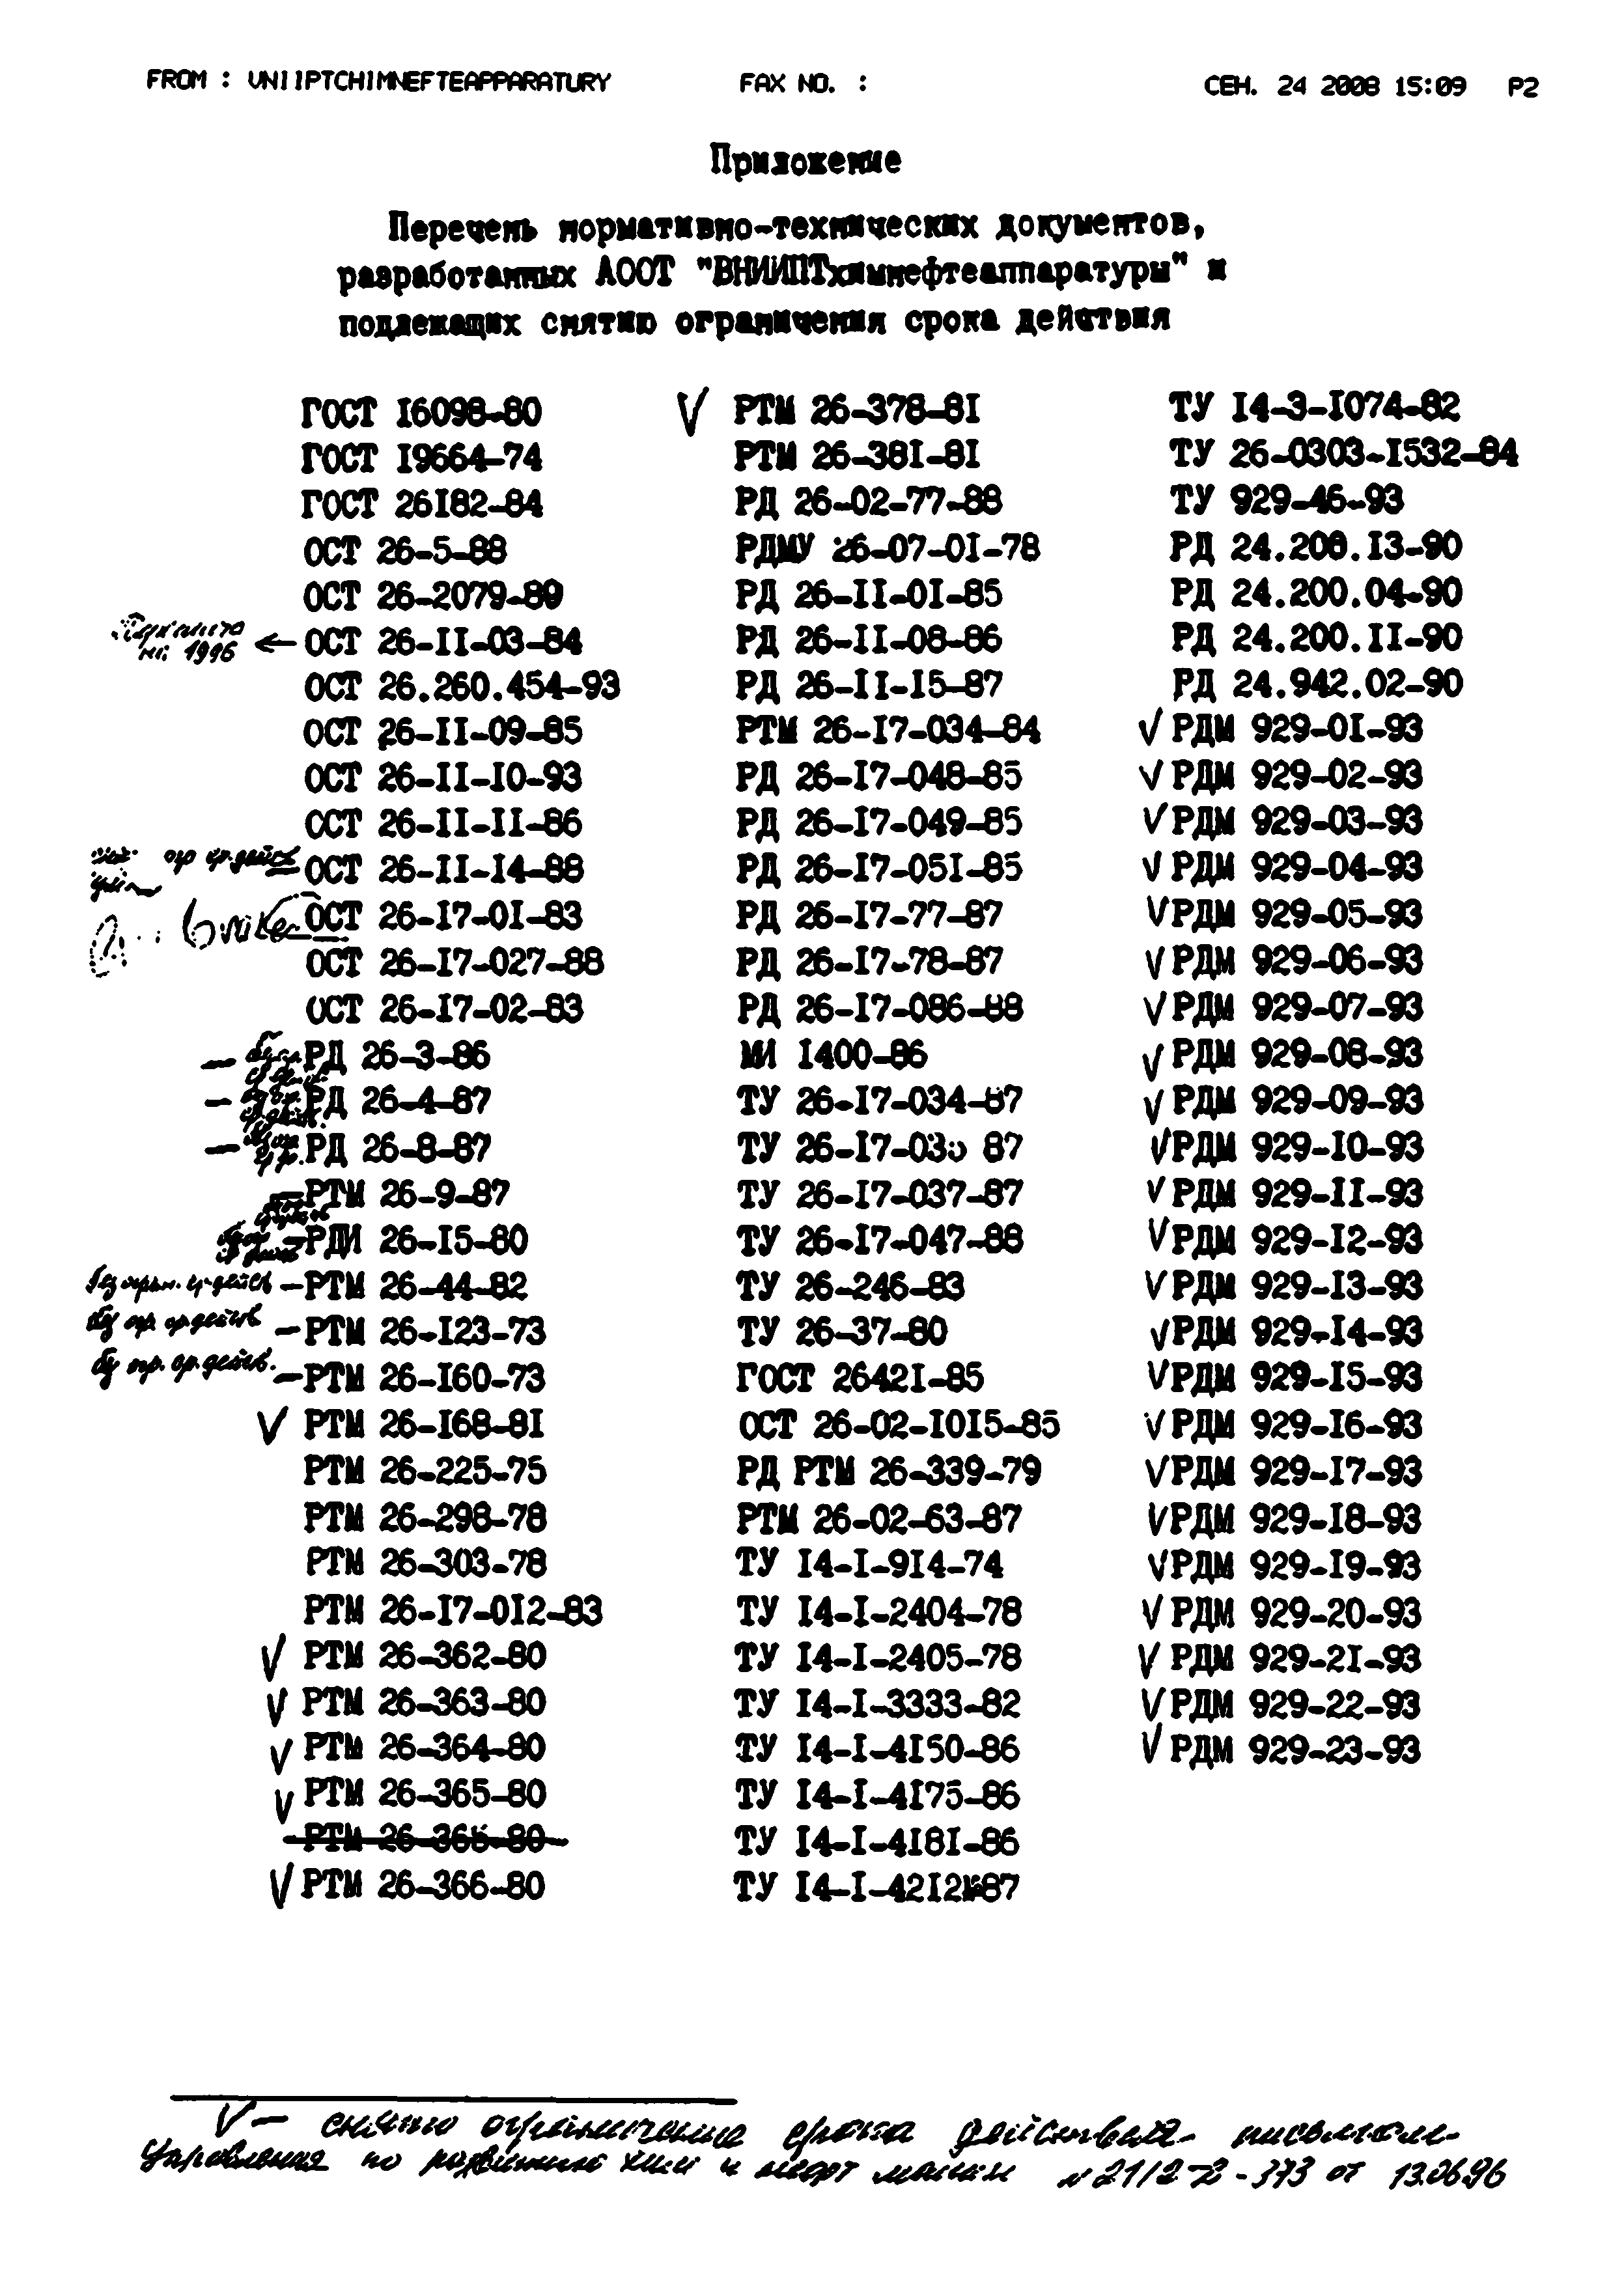 РДМ 929-12-93